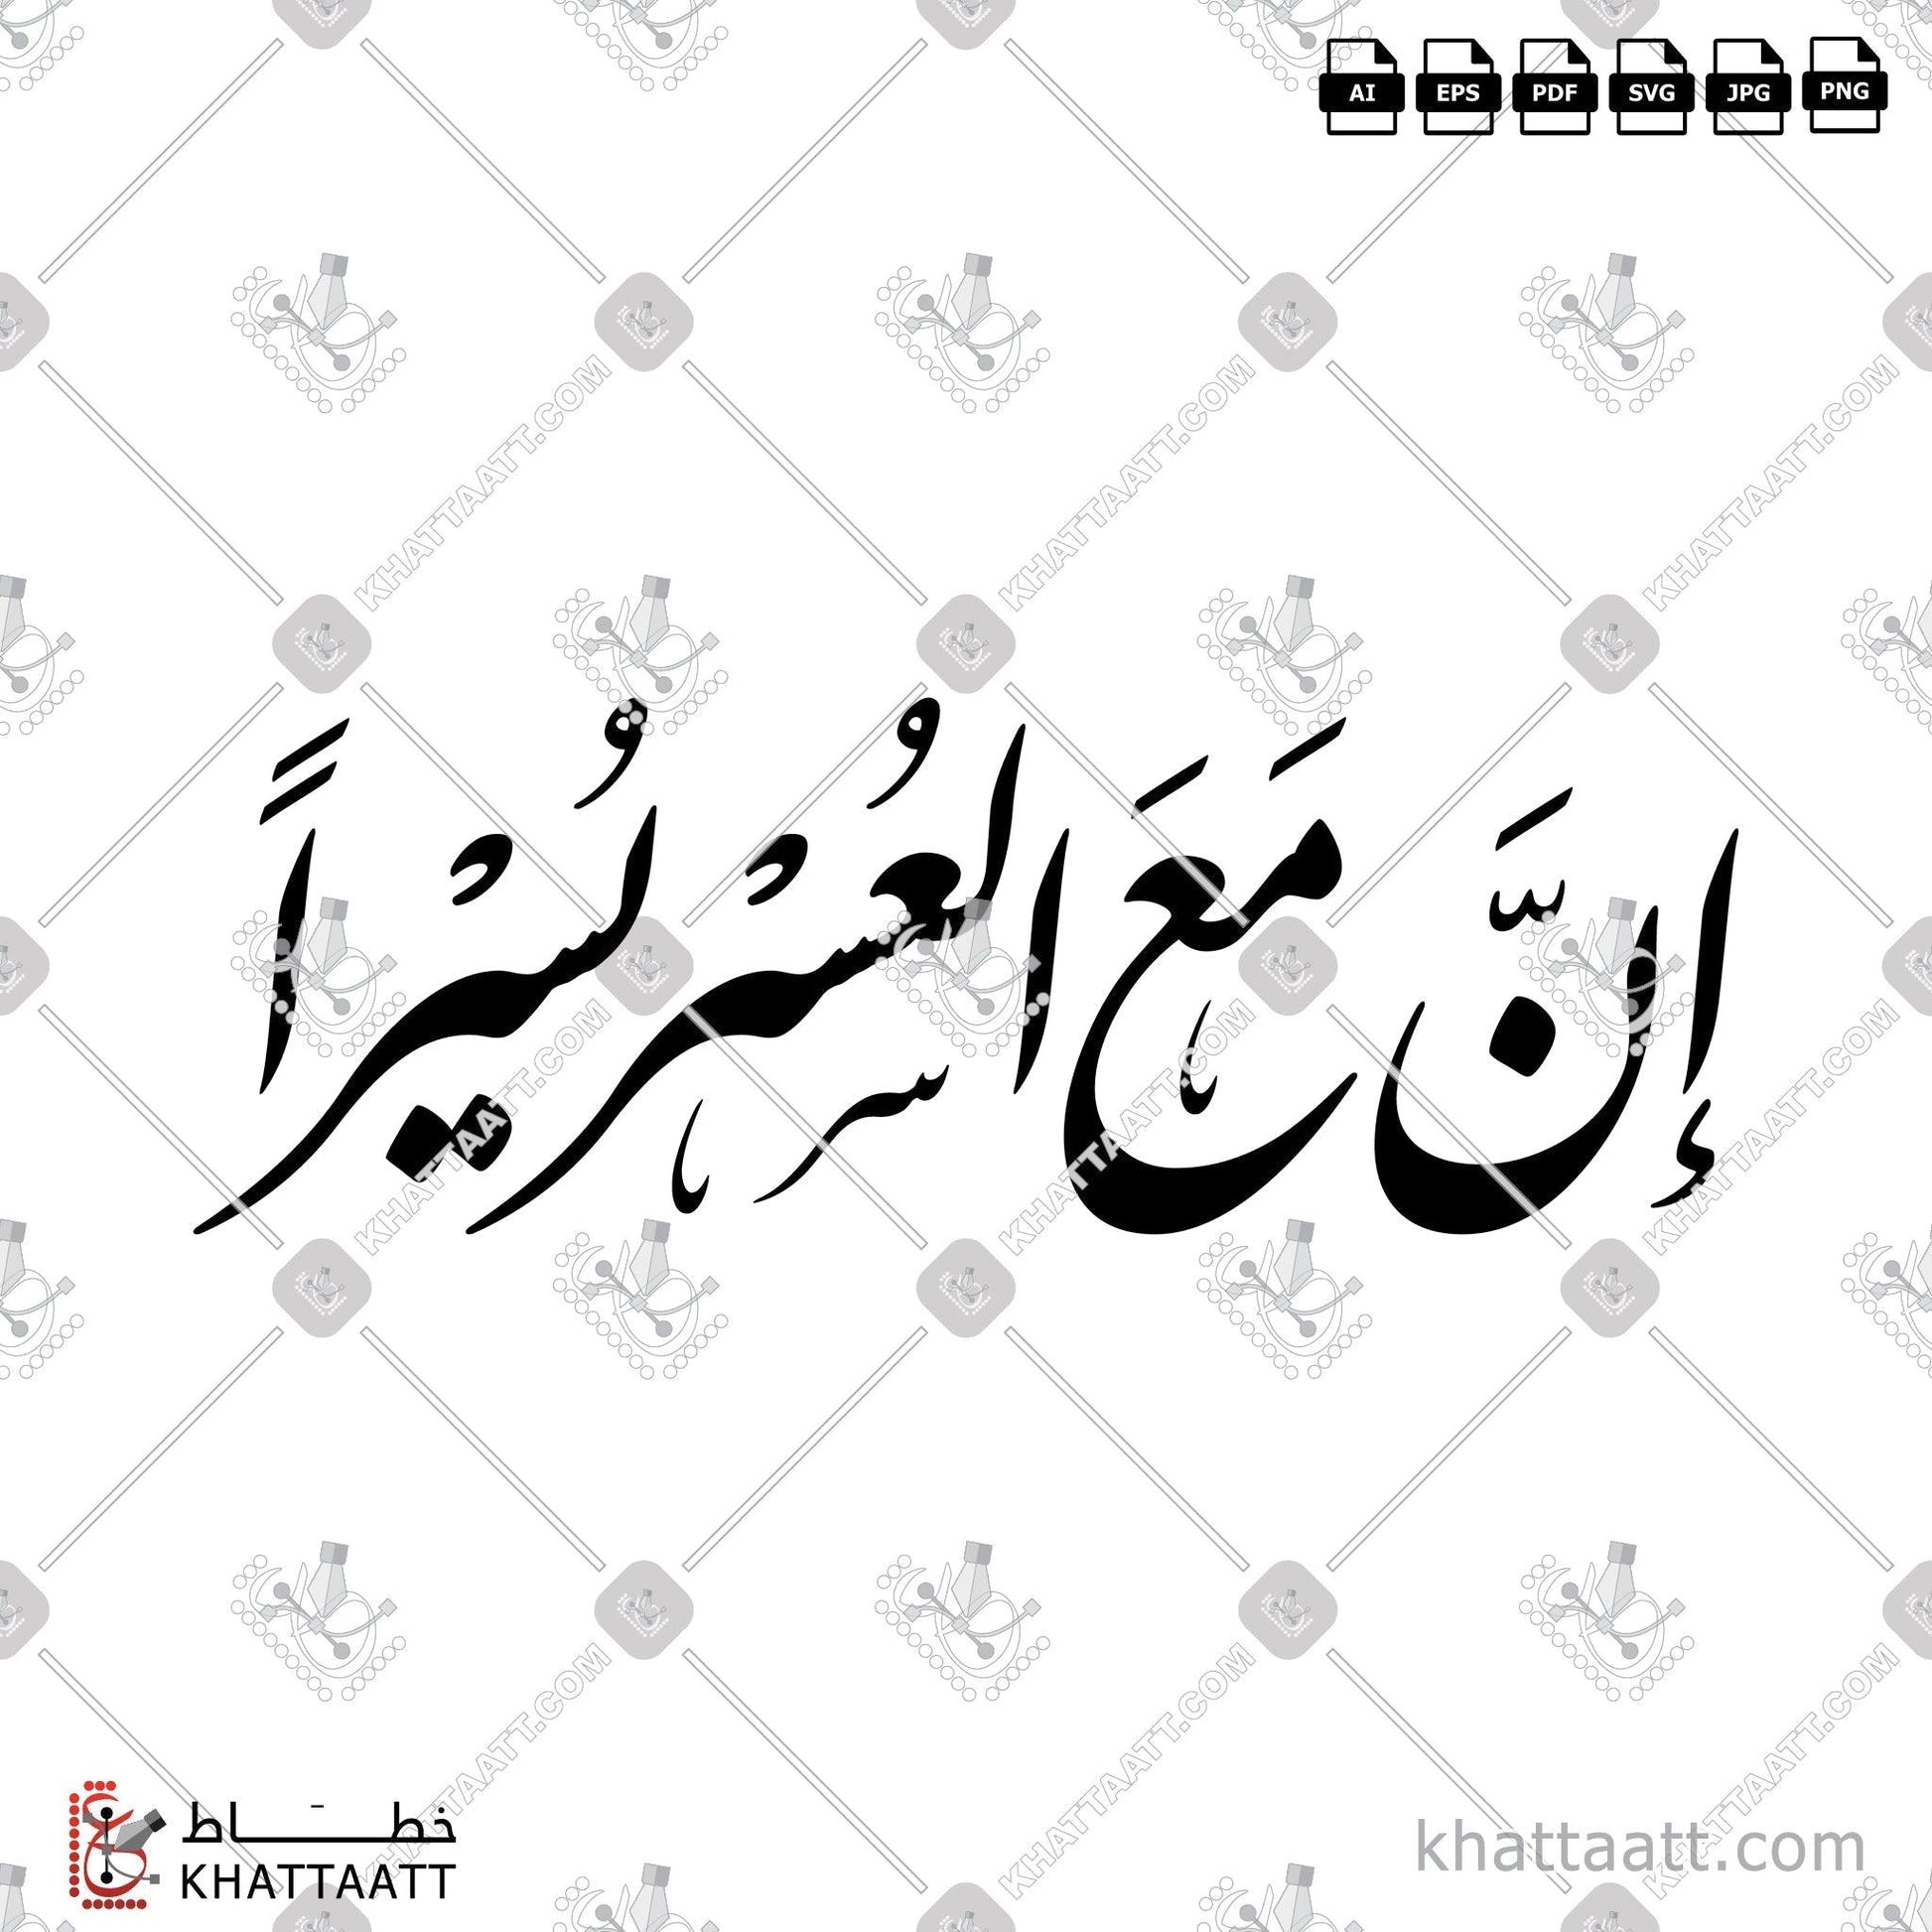 Download Arabic Calligraphy of إن مع العسر يسرا in Farsi - الخط الفارسي in vector and .png